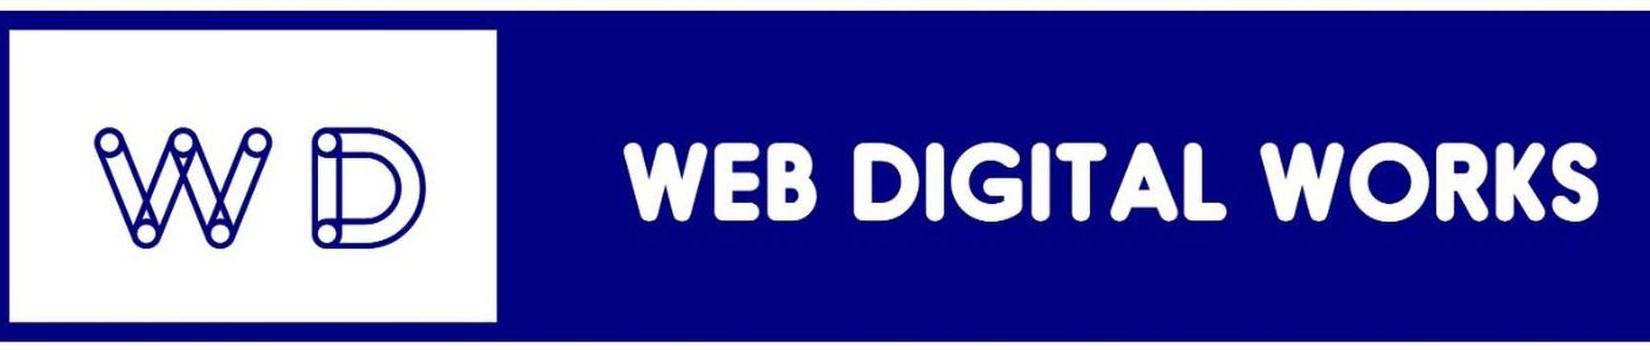 Web Digital Works